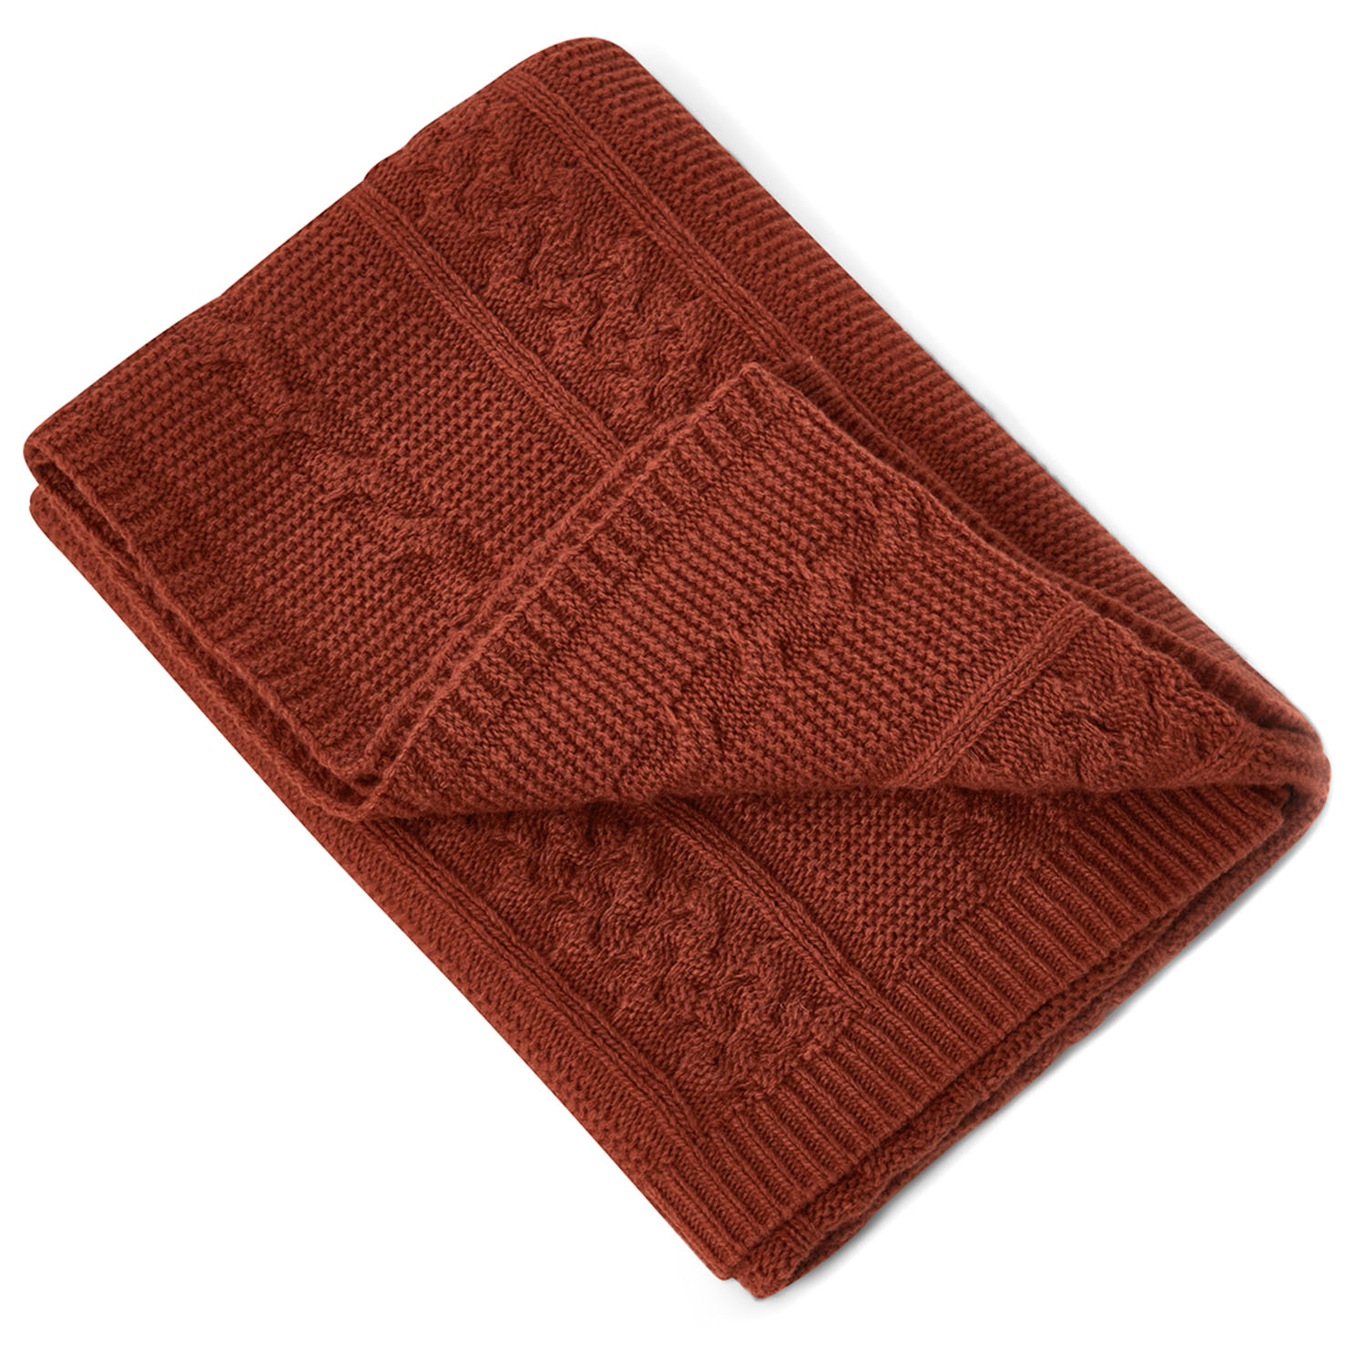 Knitted Wool Blanket 70x100 cm, Rust